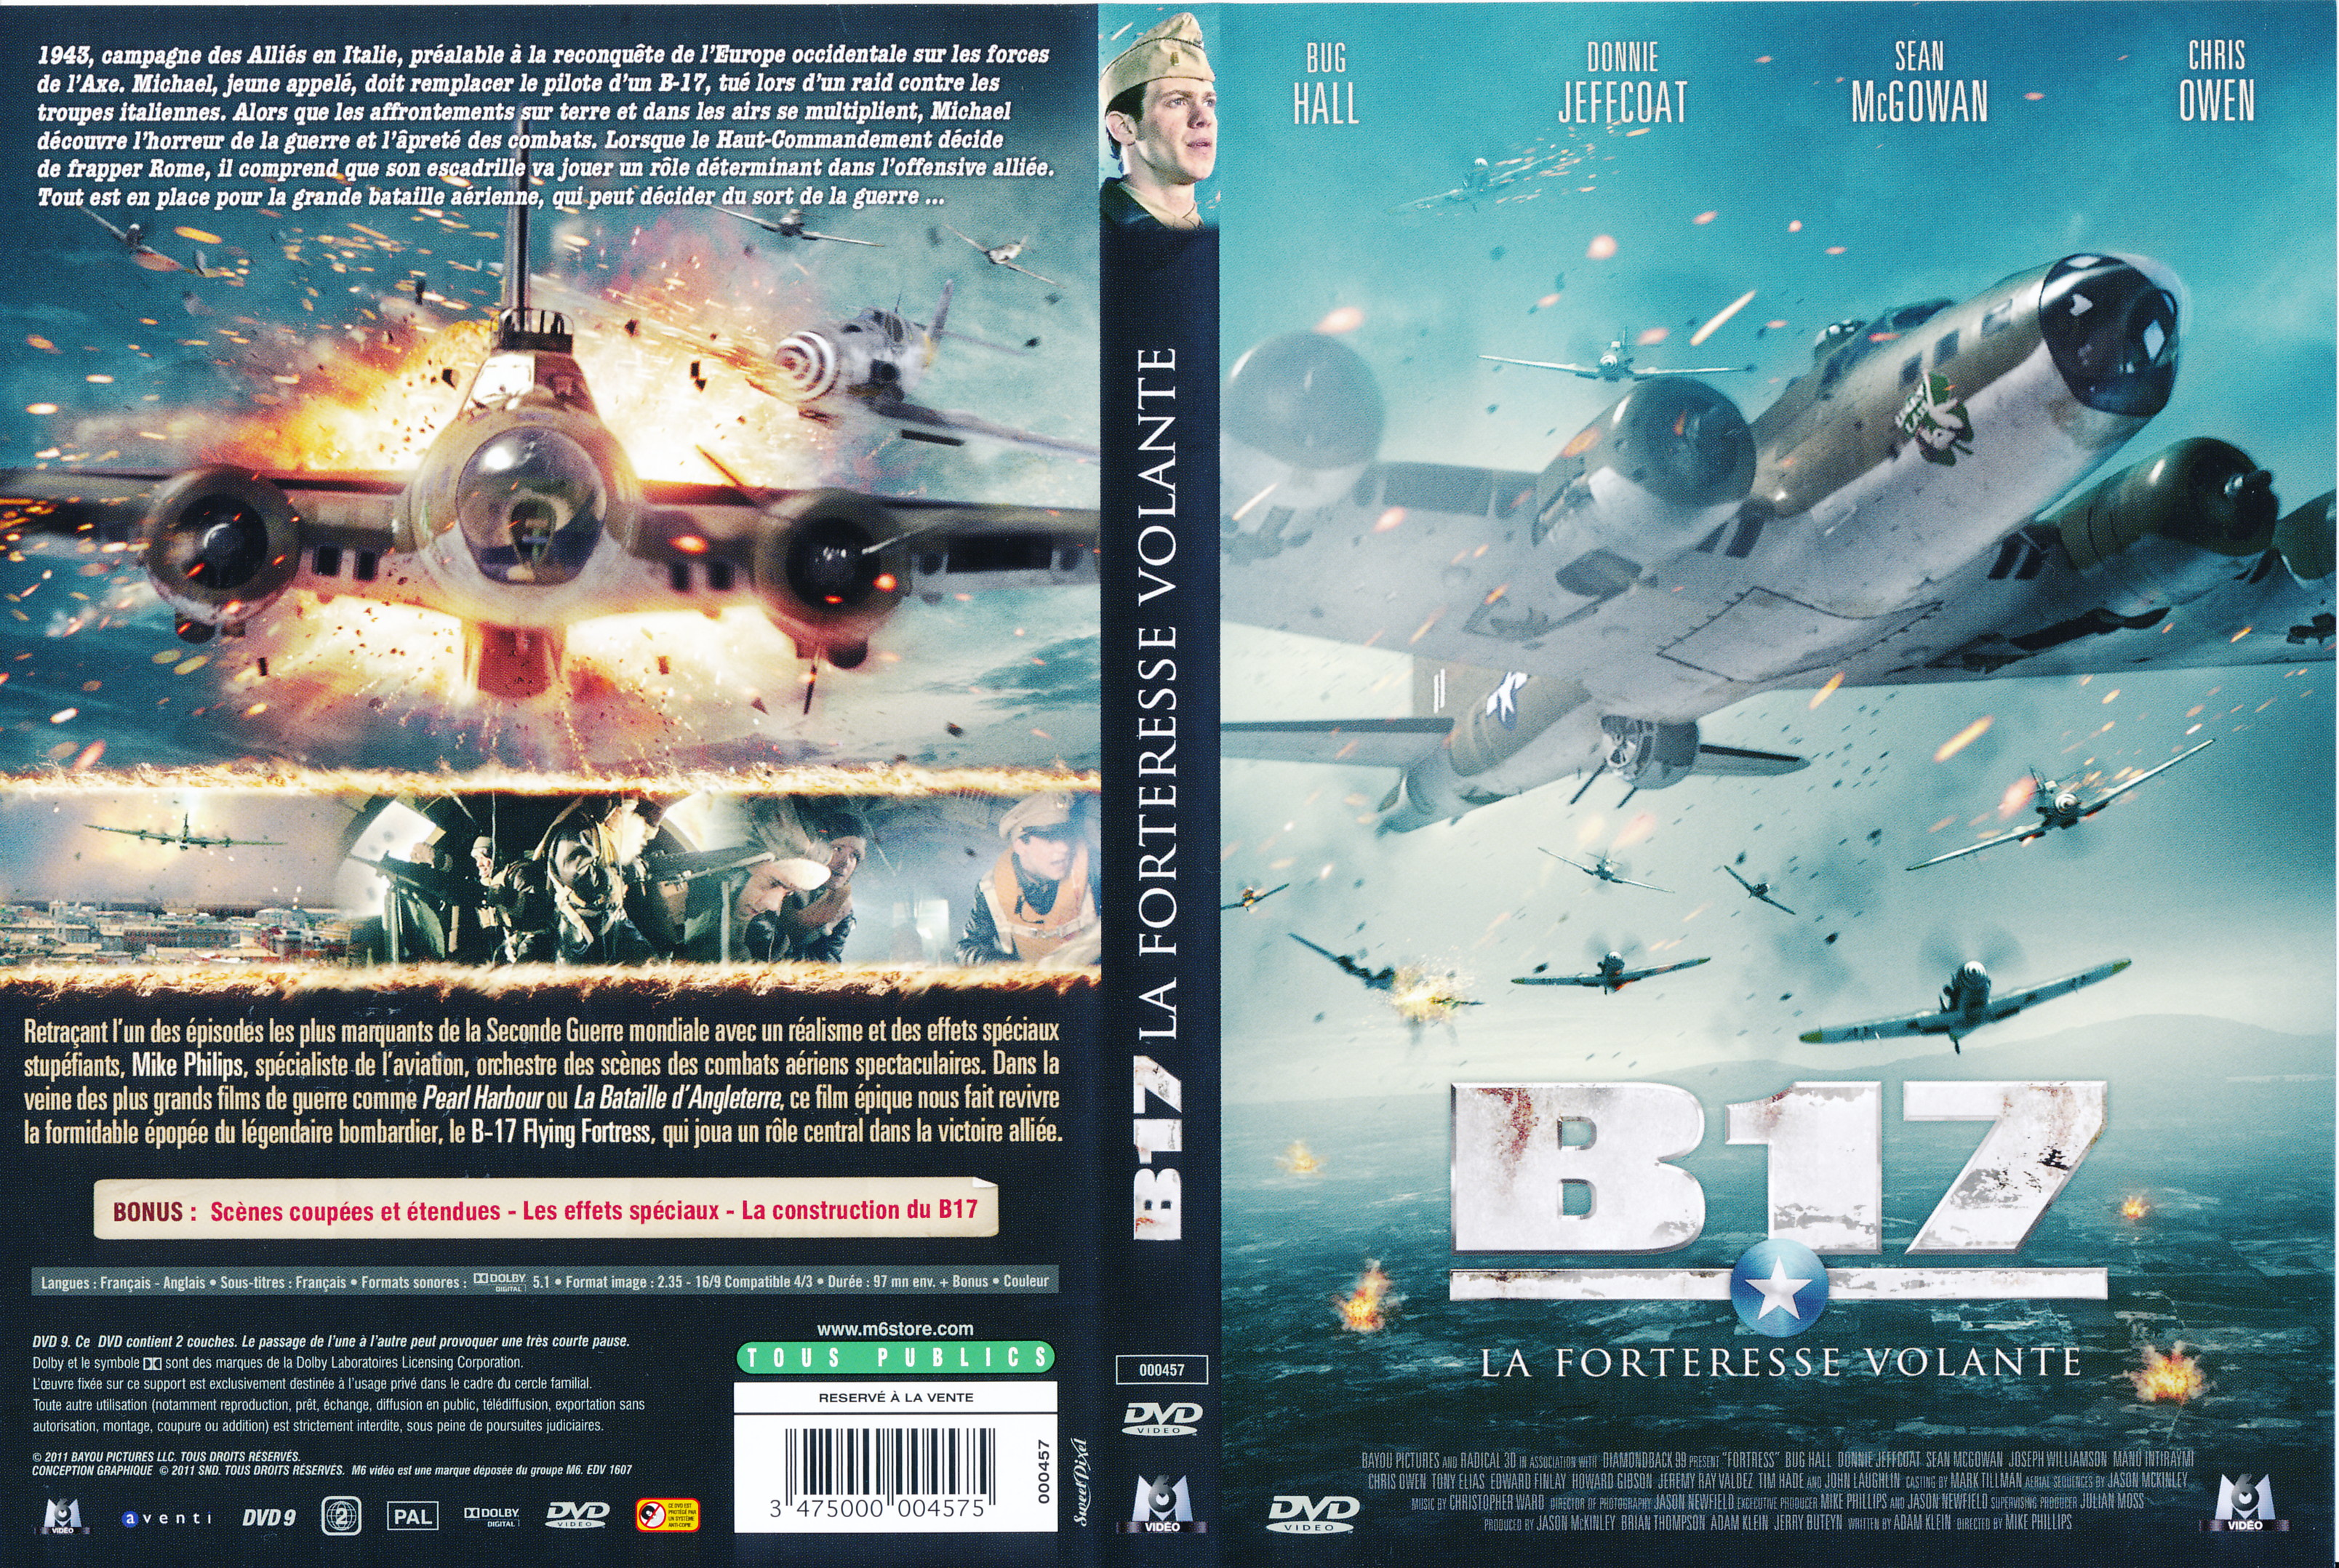 Jaquette DVD B-17 la forteresse volante